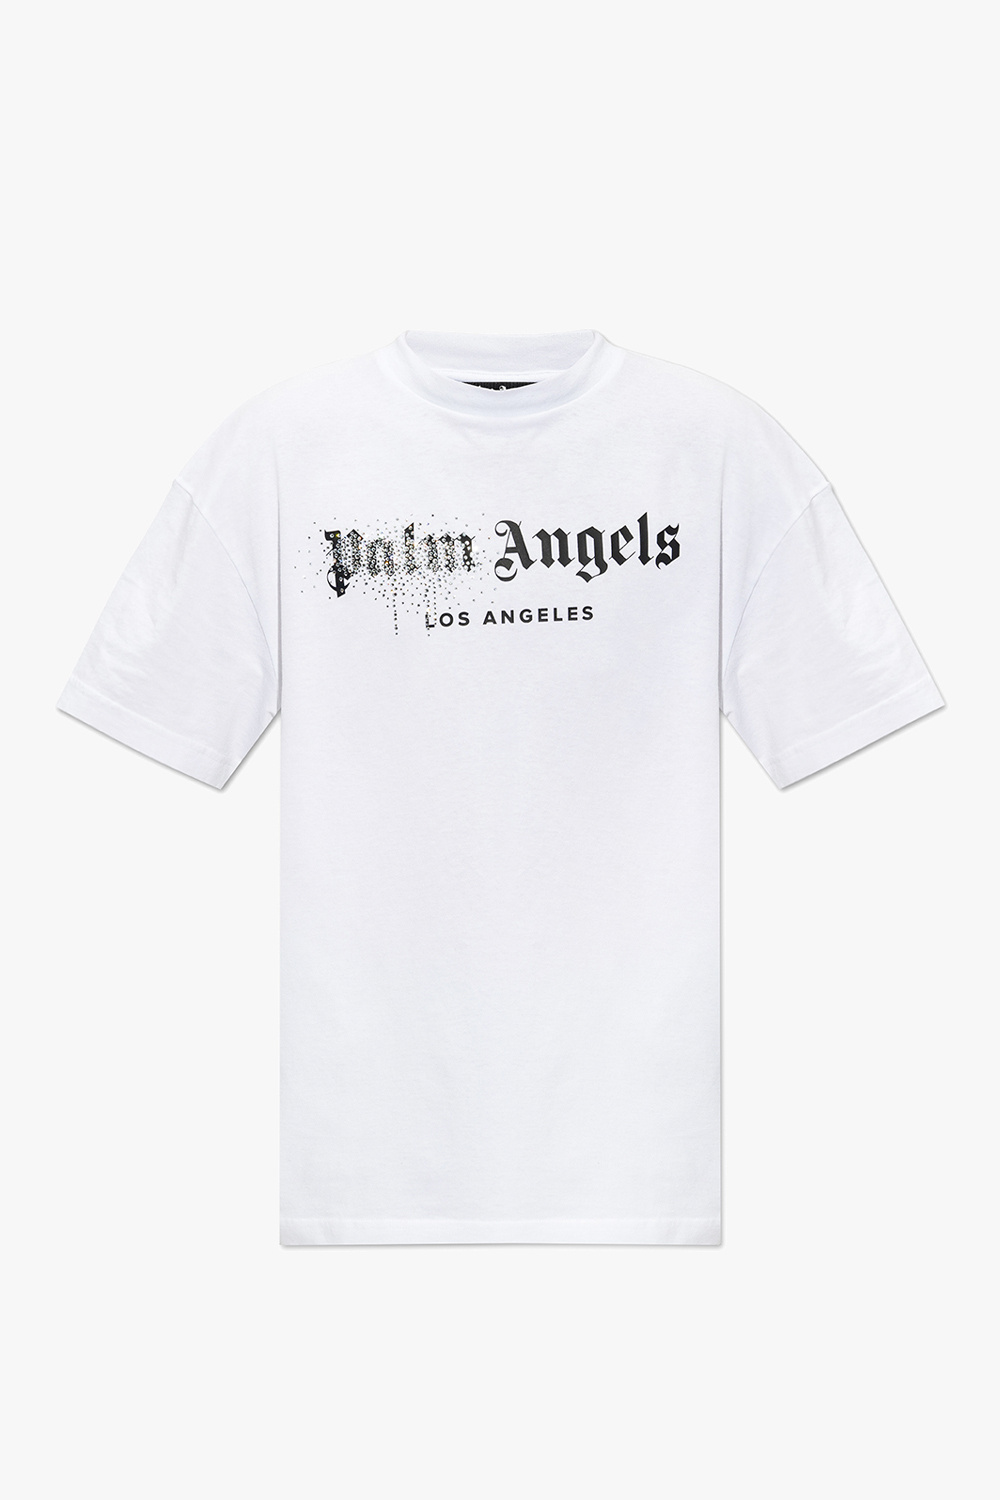 Palm Angels Shirt -  Canada